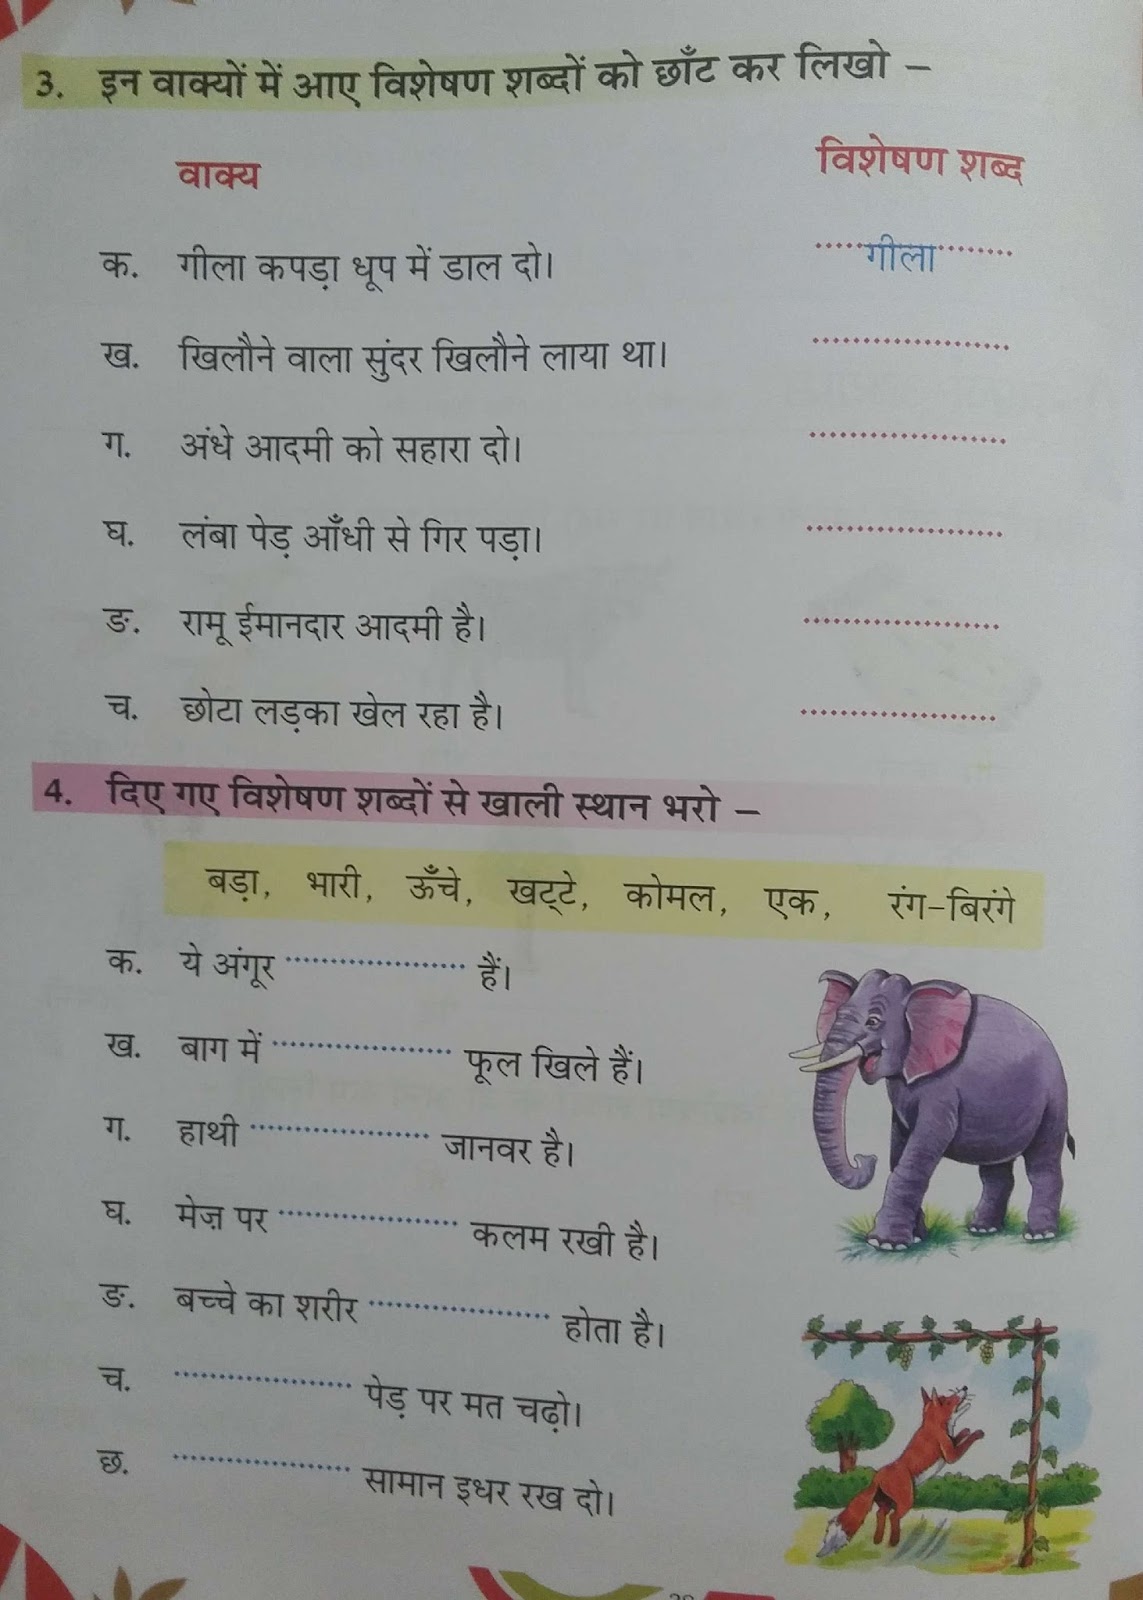 hindi-grammar-work-sheet-collection-for-classes-5-6-7-8-adjectives-work-sheets-for-classes-3